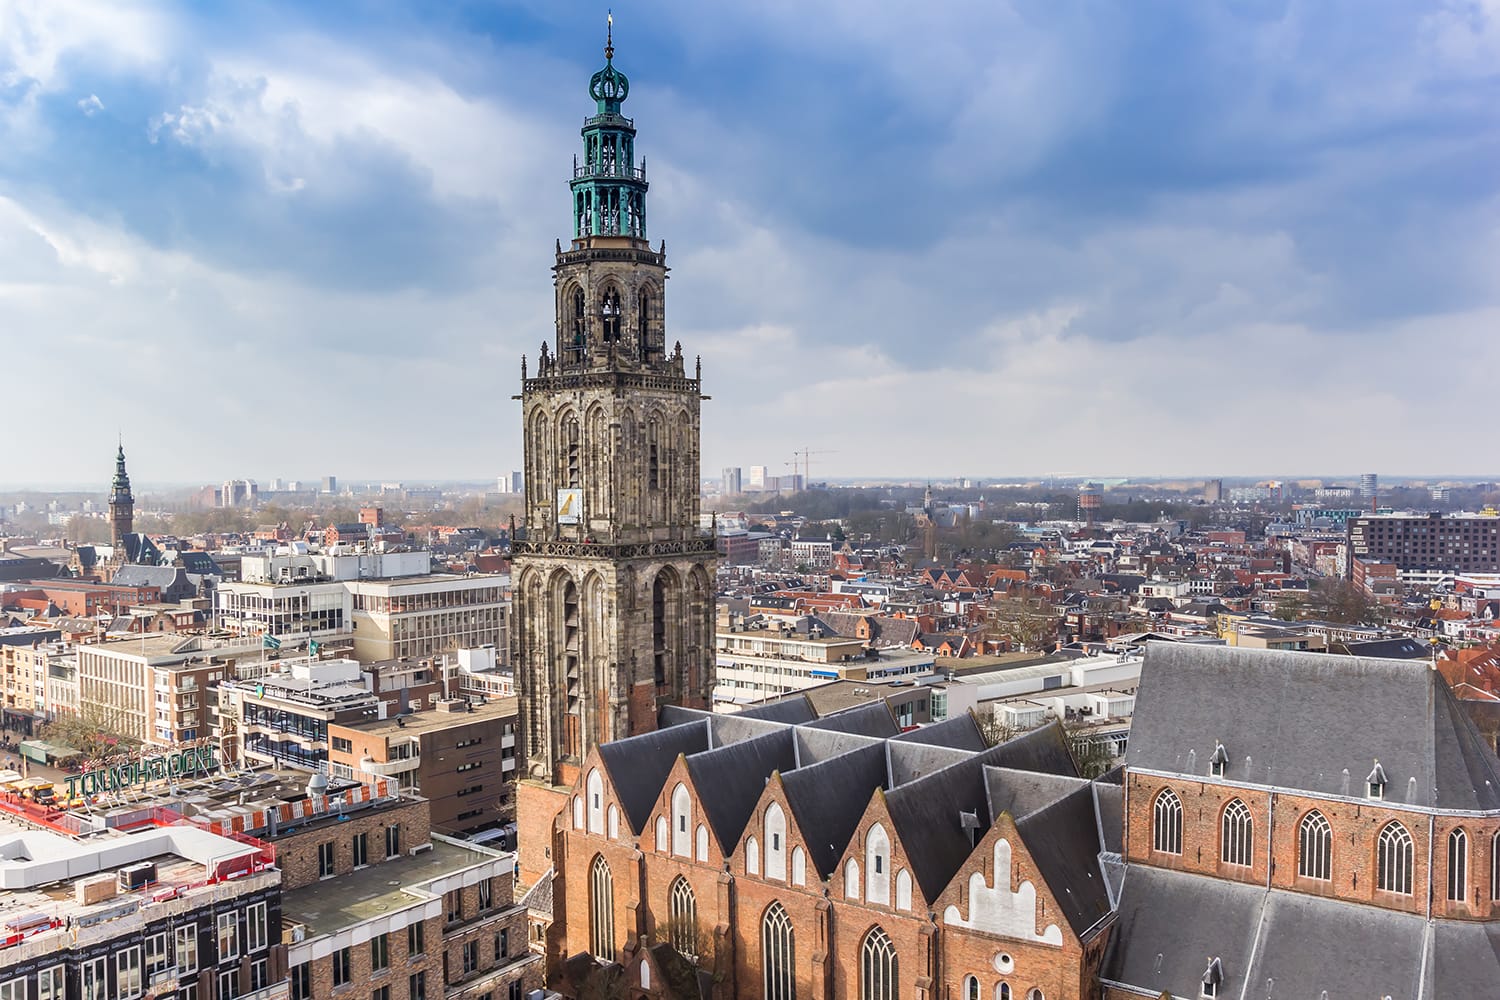 Historic Martini church dominating the skyline of Groningen, Netherlands